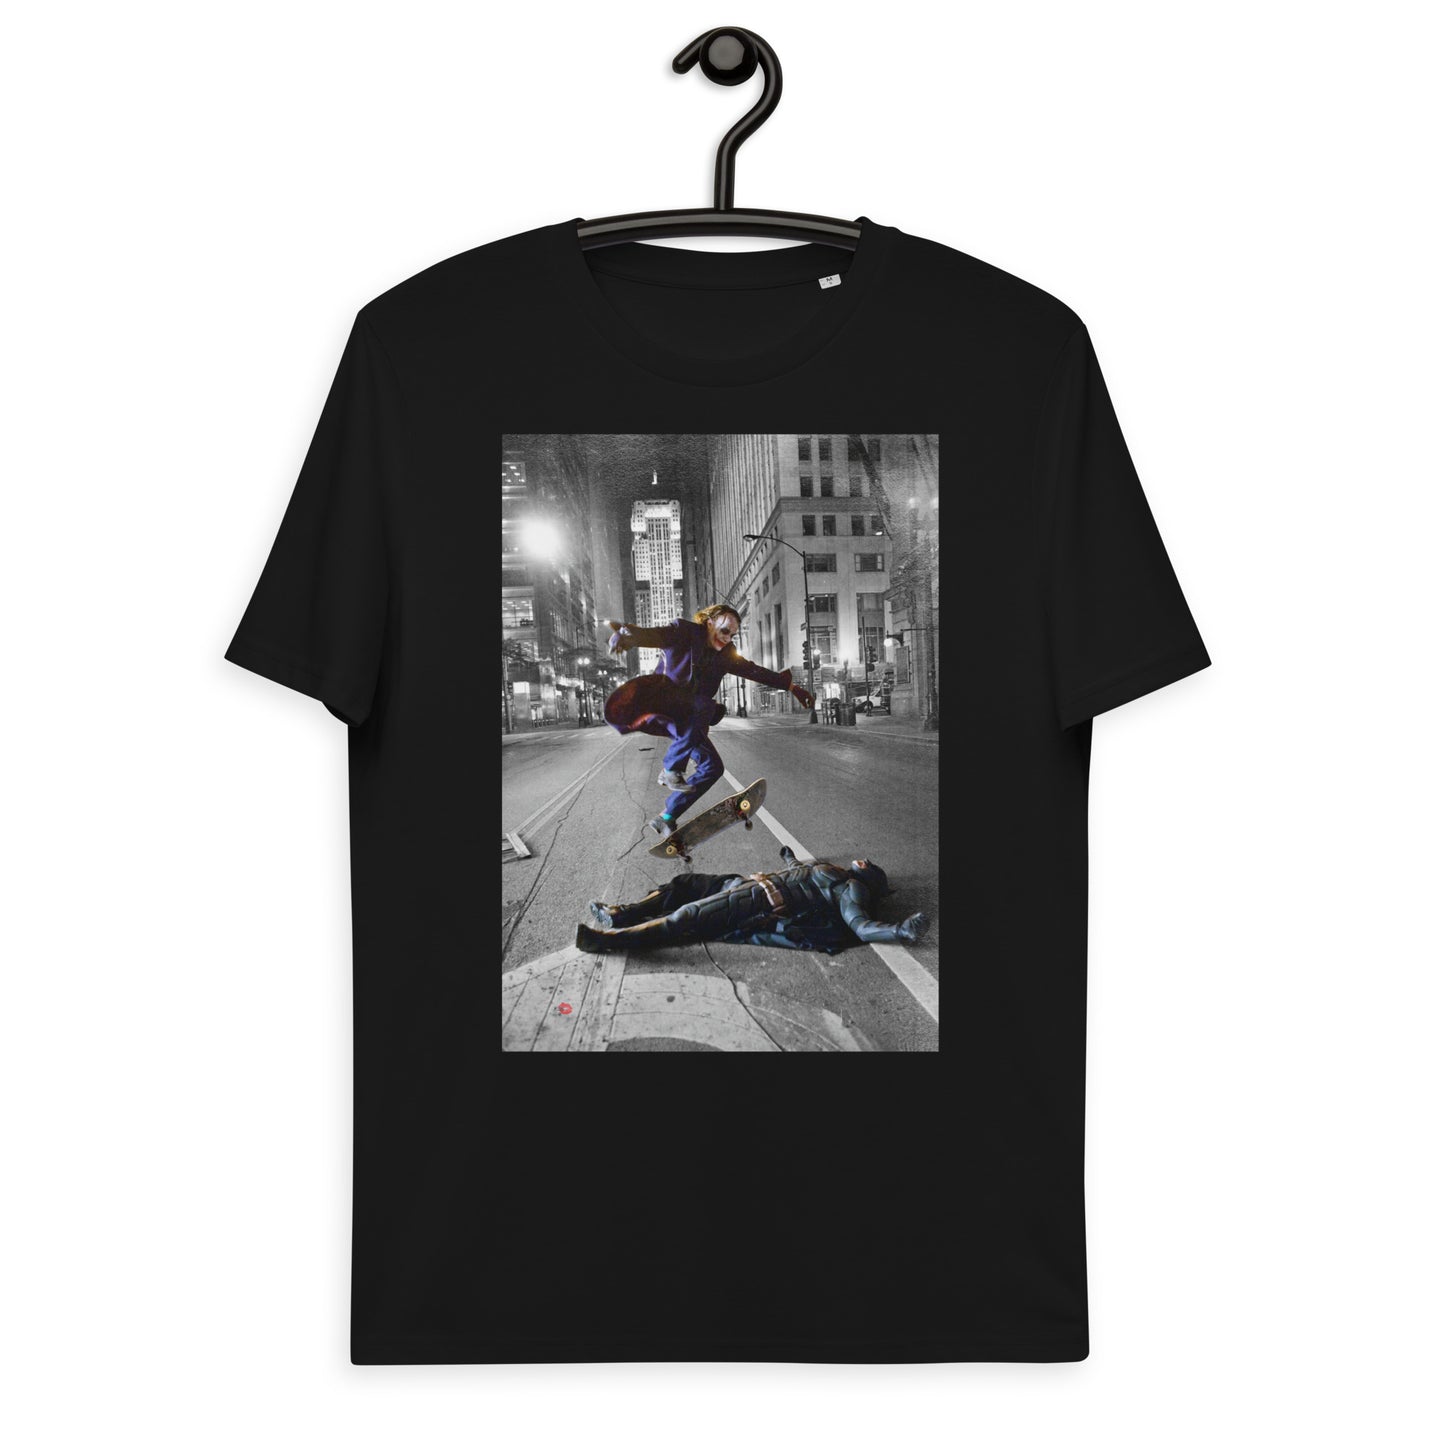 Joker/Batman Skateboard Unisex organic cotton t-shirt - Heath Ledger, Christian Bale - Skater Cool